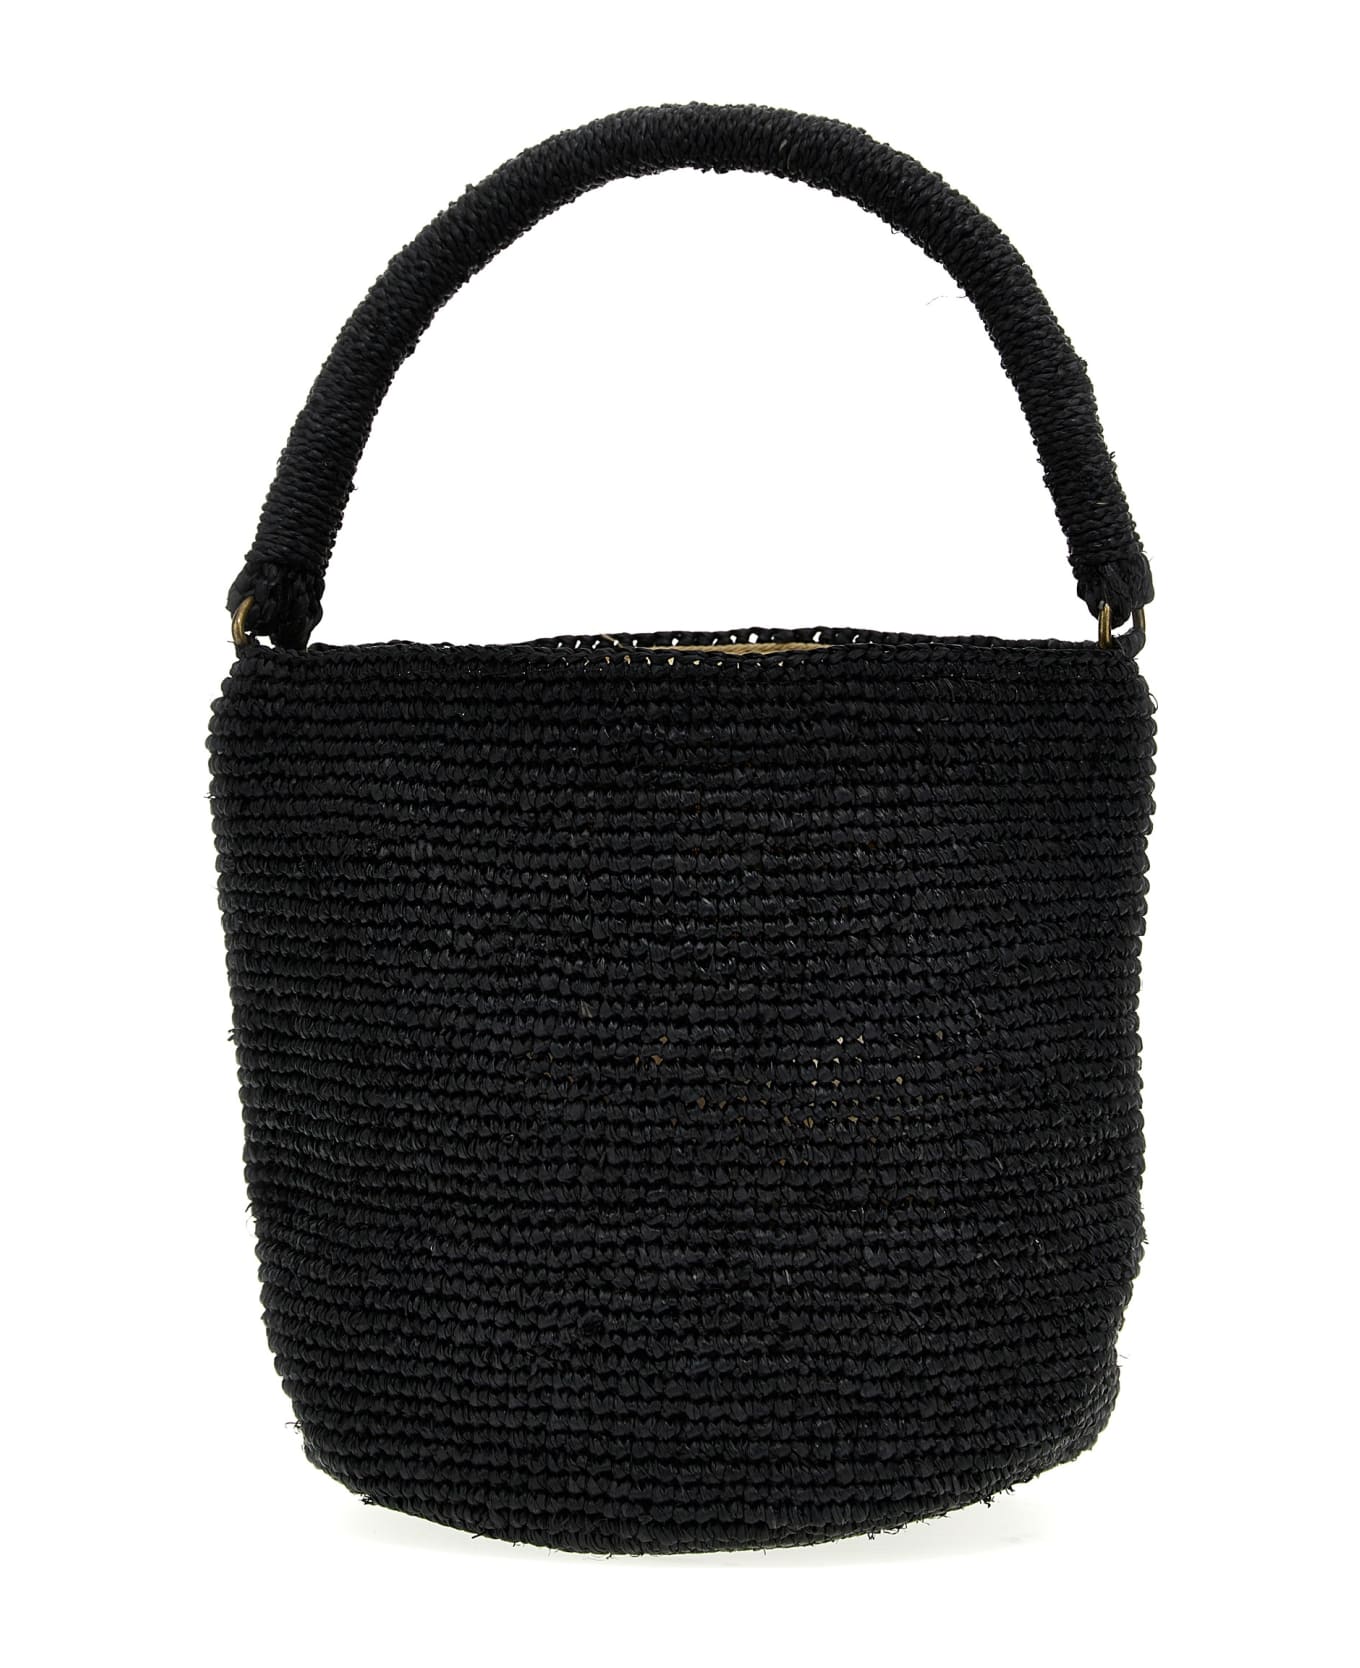 Ibeliv 'siny' Handbag - Black  